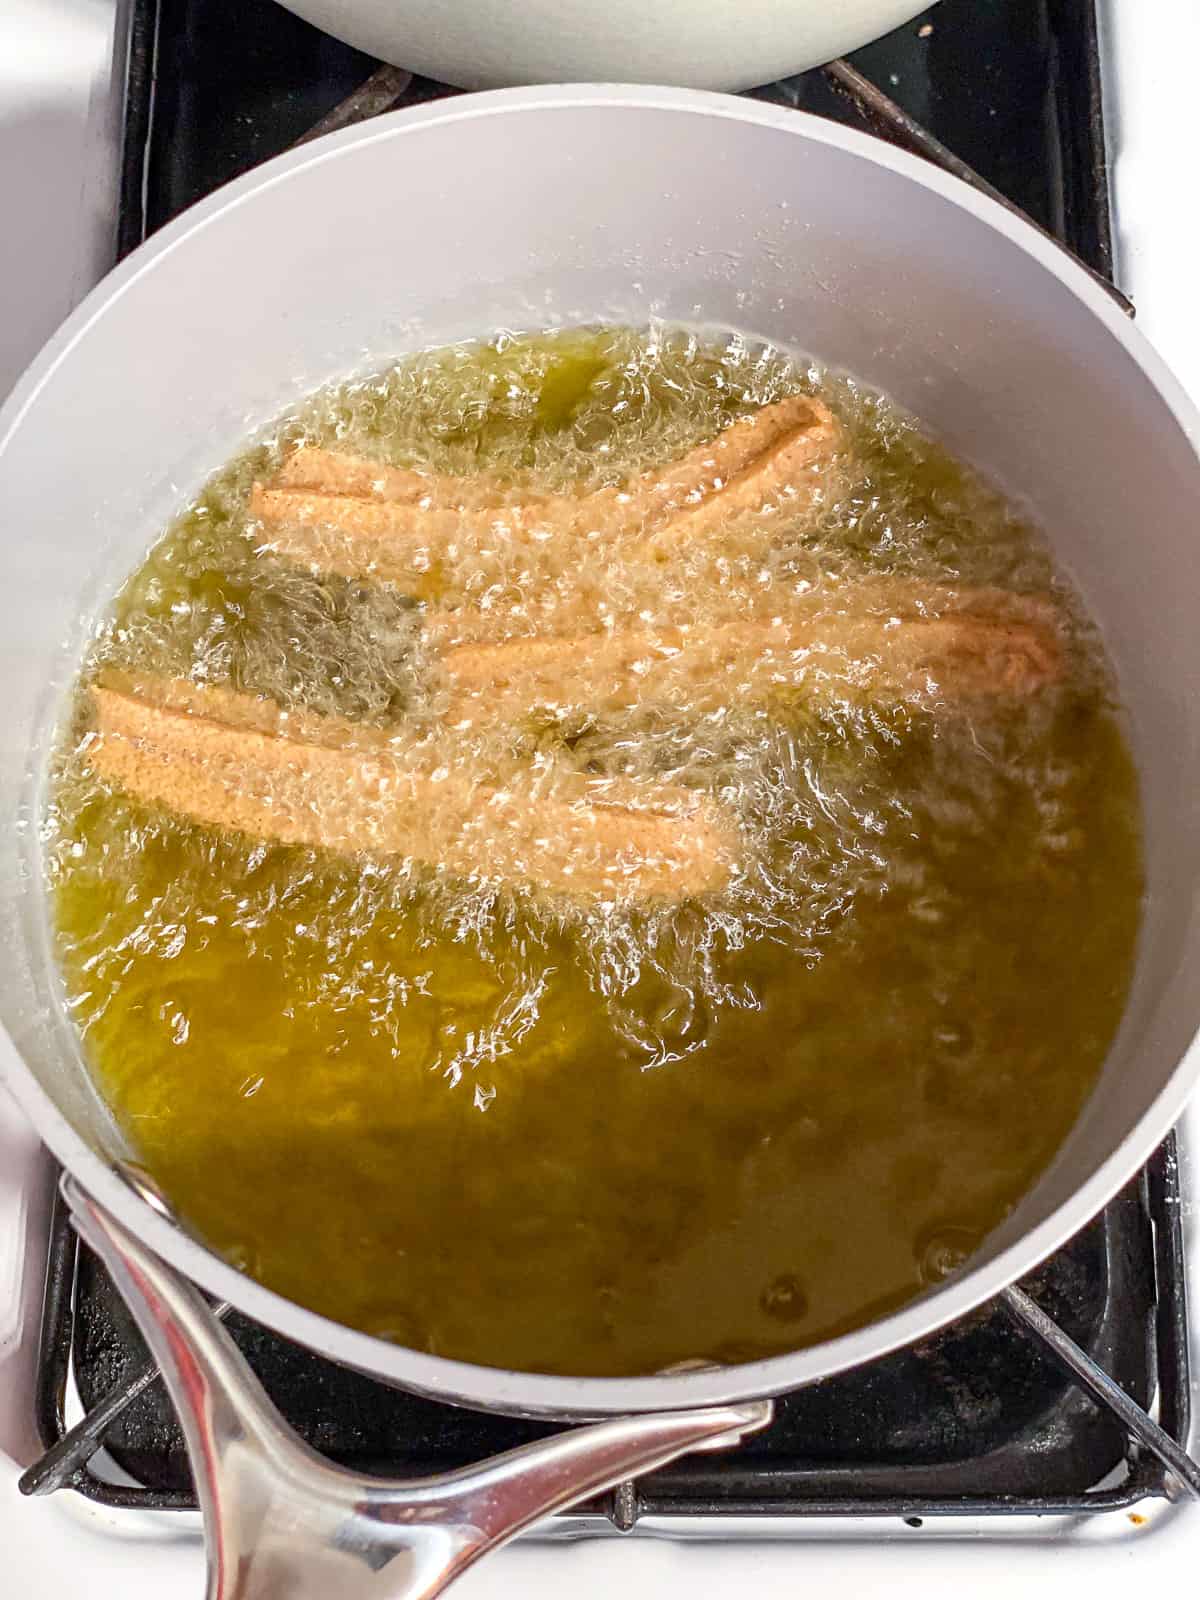 deep frying 3 vegan churros in a saucepan.